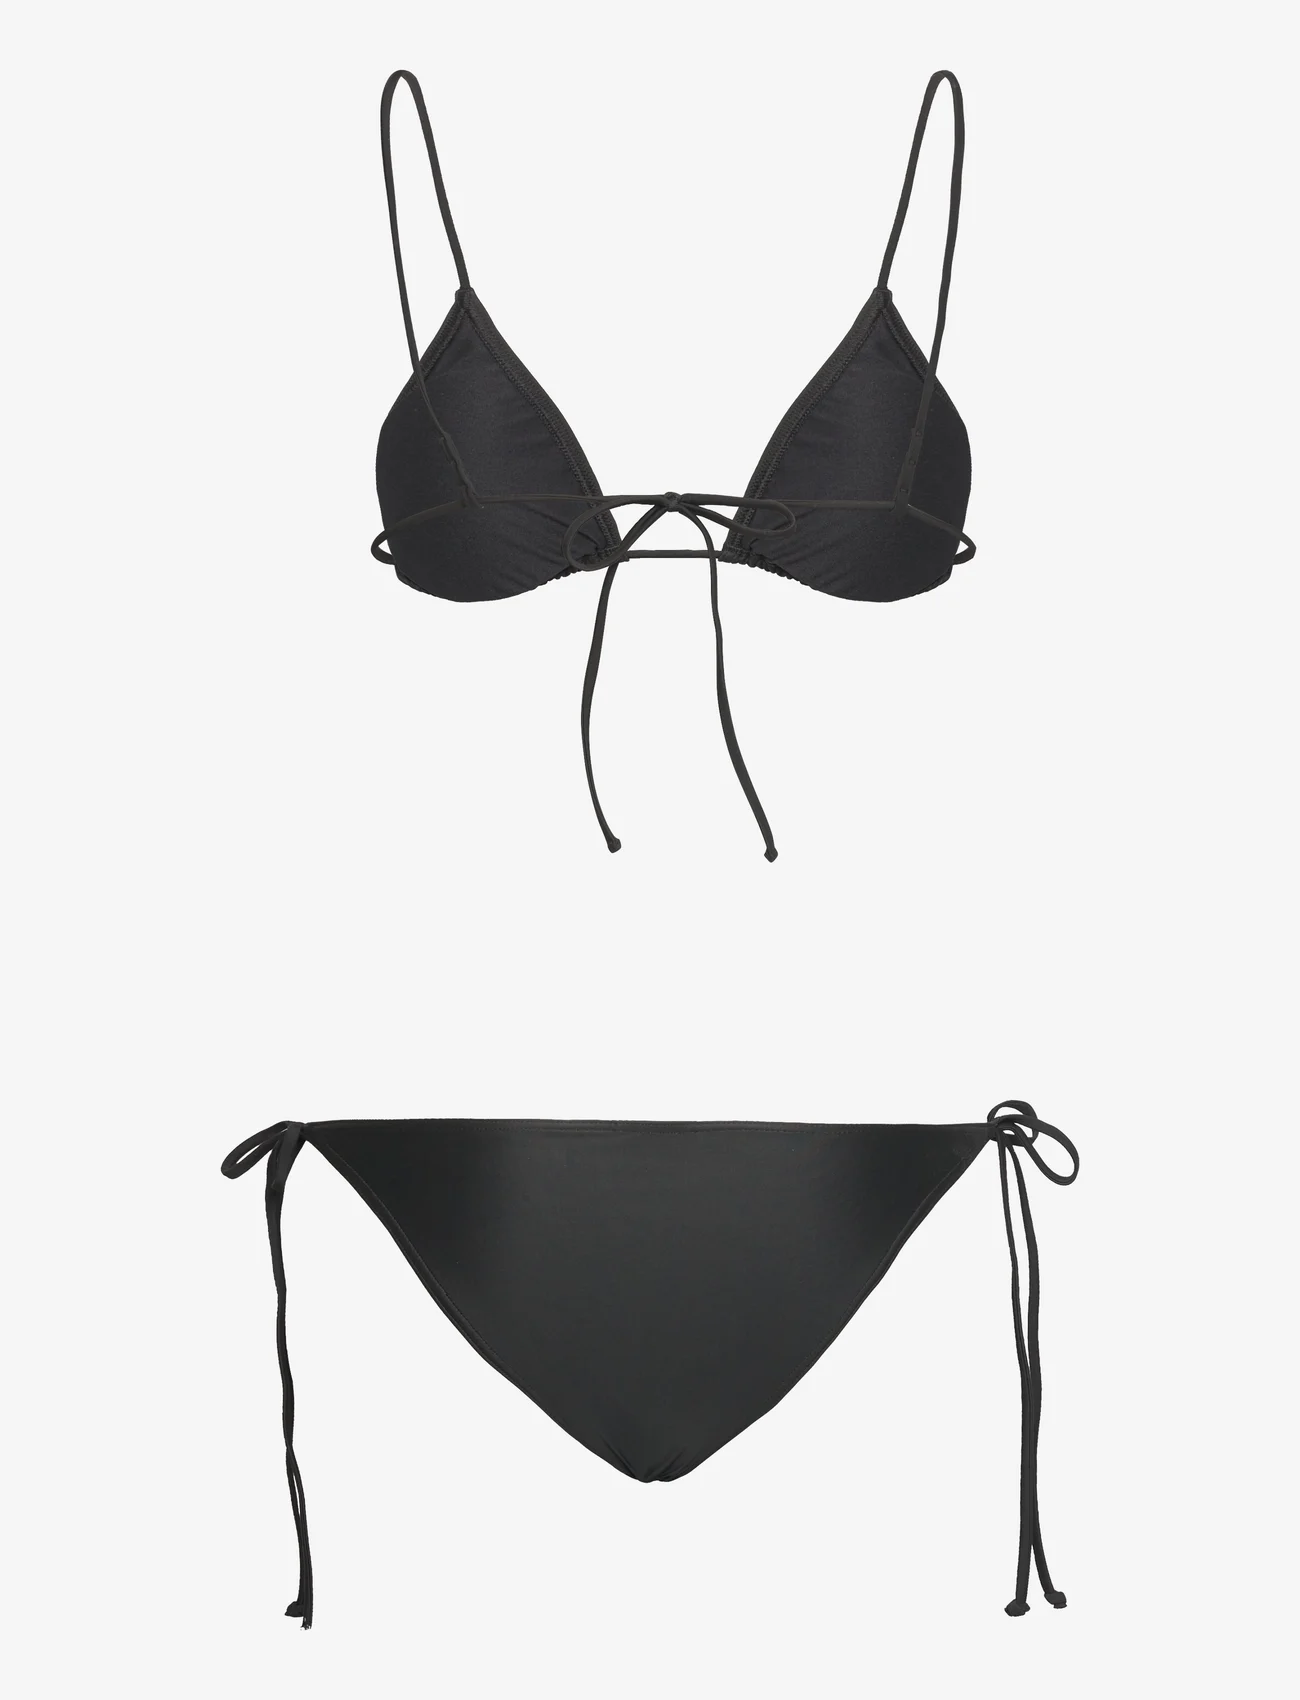 adidas Performance - Adicolor Triangle Bikini - bikini sets - black/white - 1